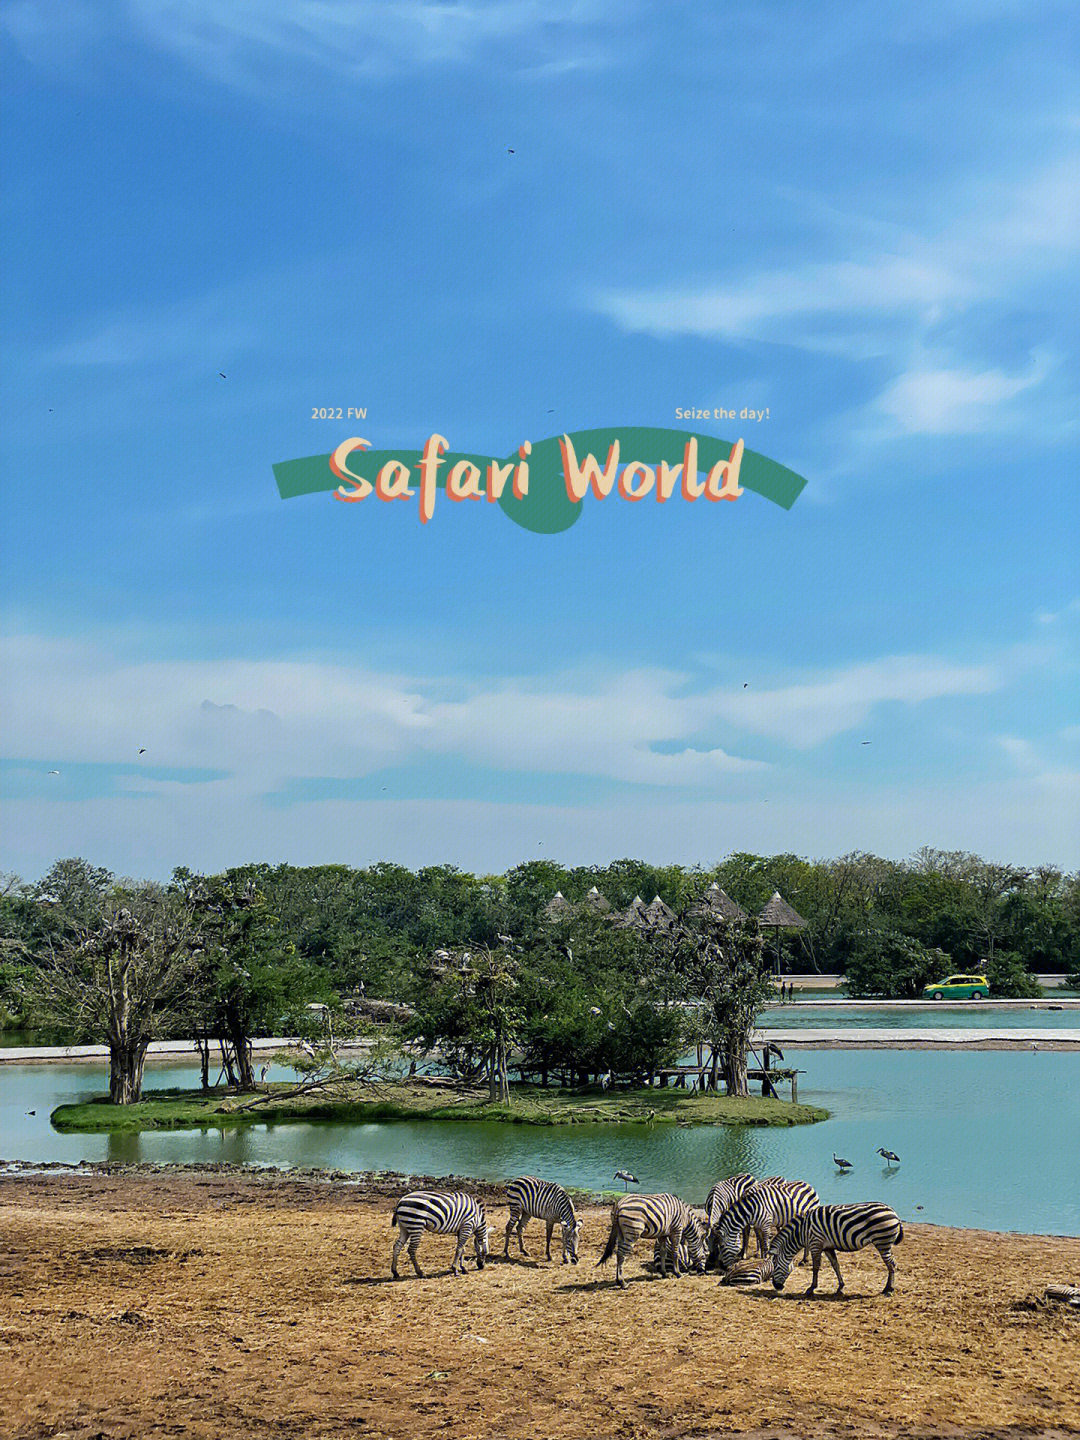 99safari world & safari park bangkok曼谷的野生动物王国分两个园